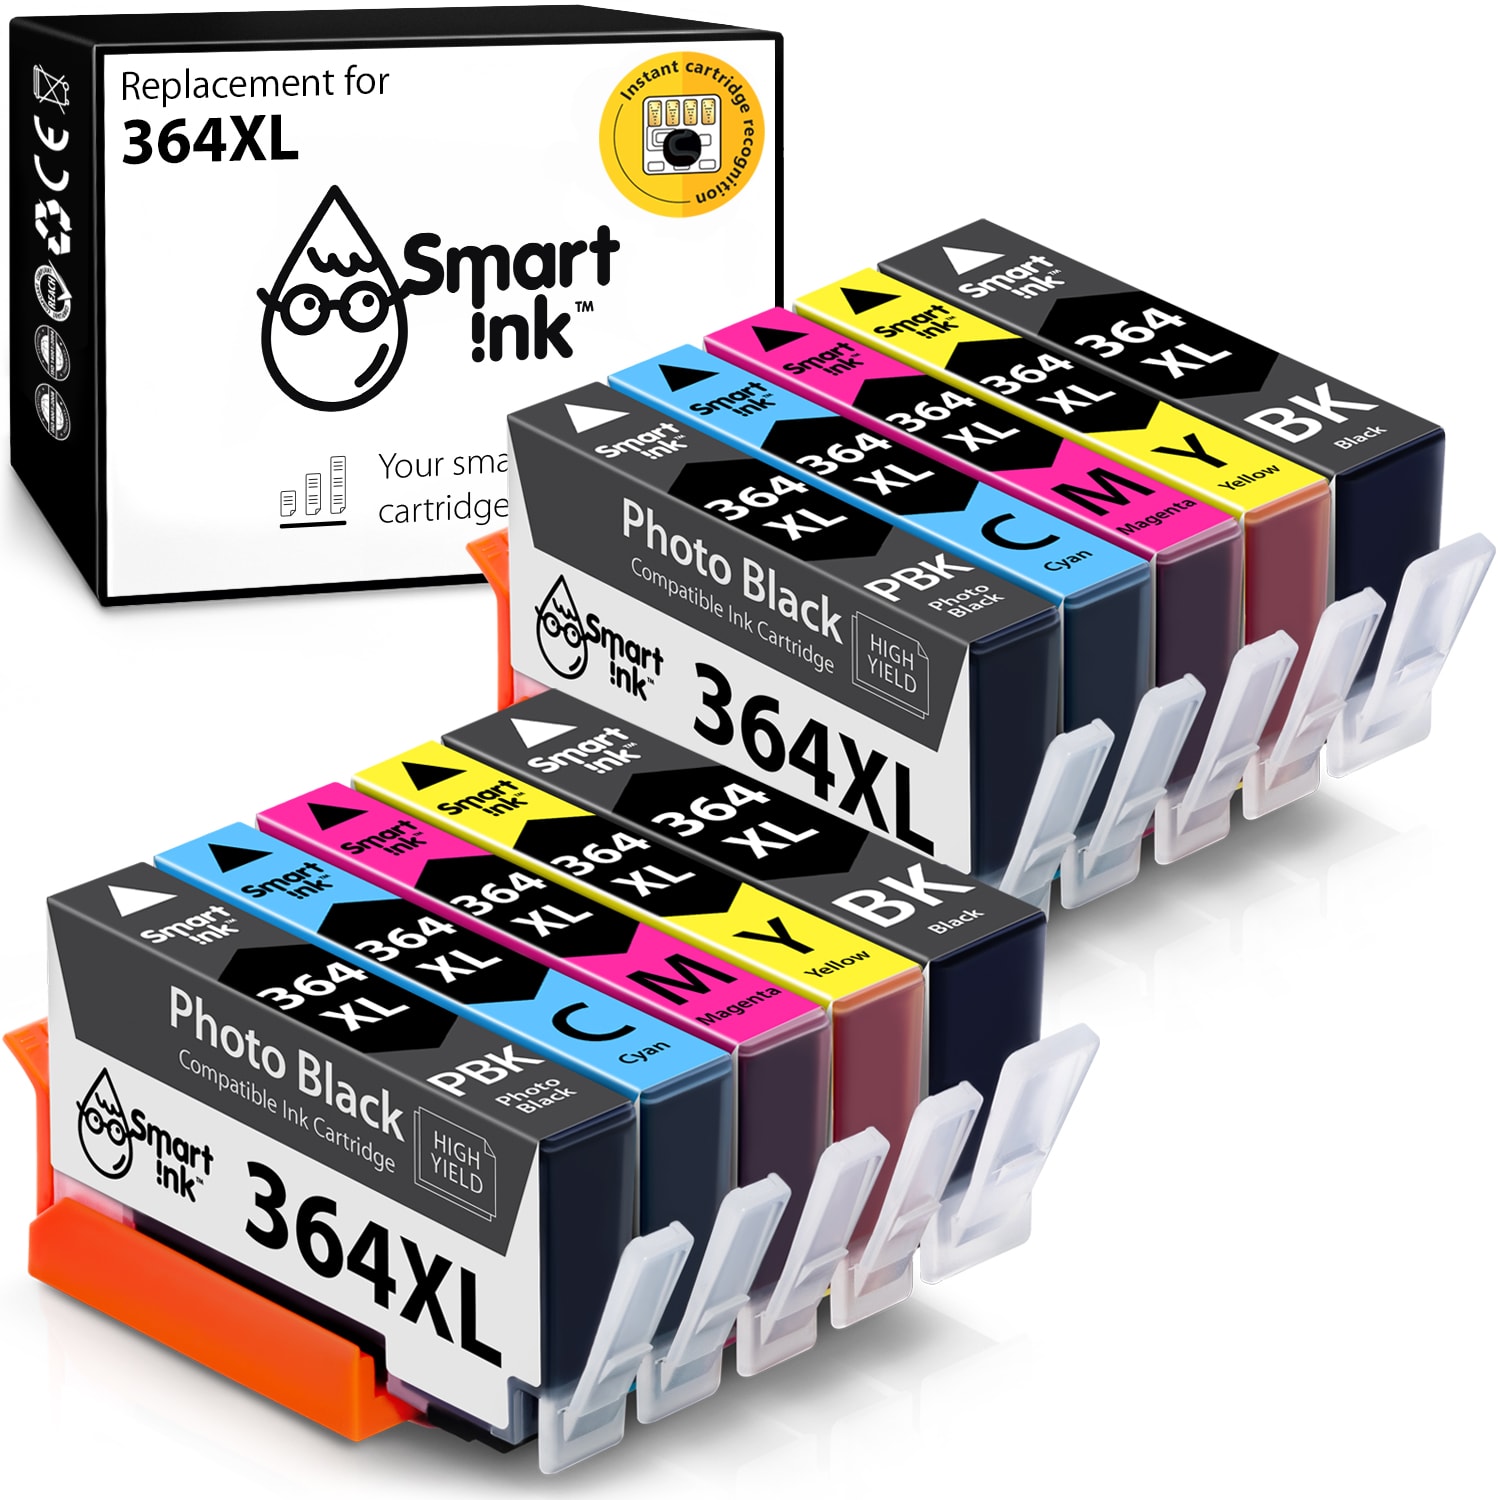 . Verslagen vragen HP 364 XL (Photo Black) Ink Cartridge Replacement - Buy Printer Cartridges  in Europe at the best price | Smart Ink